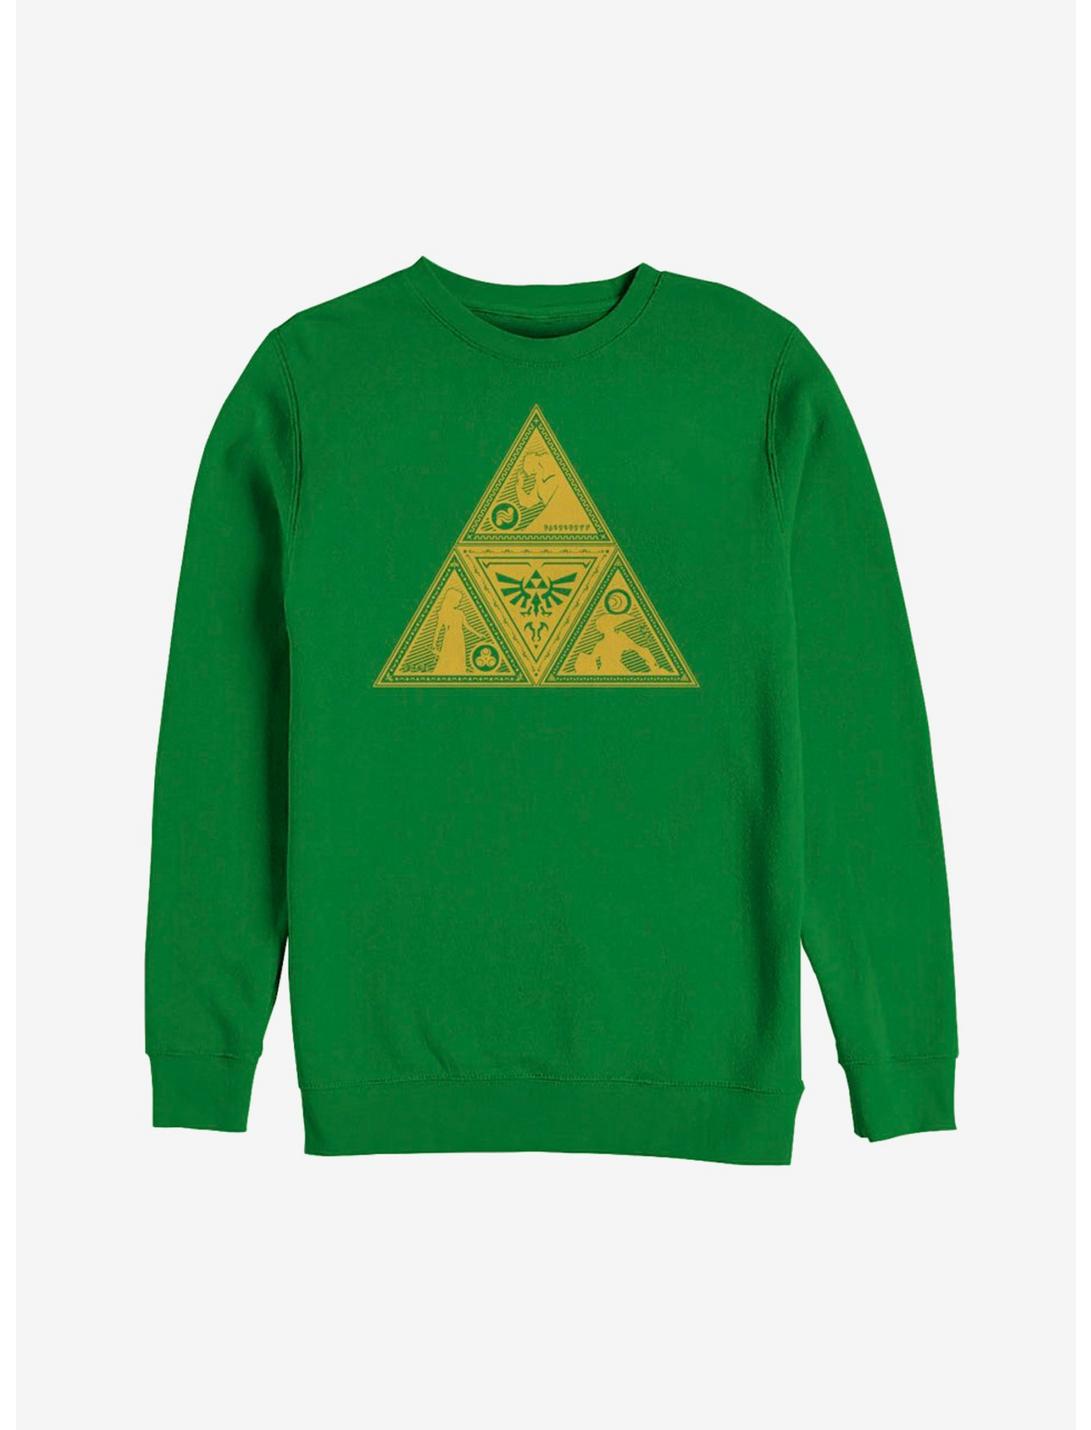 Nintendo Legend of Zelda Triforce Silhouette Sweatshirt, KELLY, hi-res